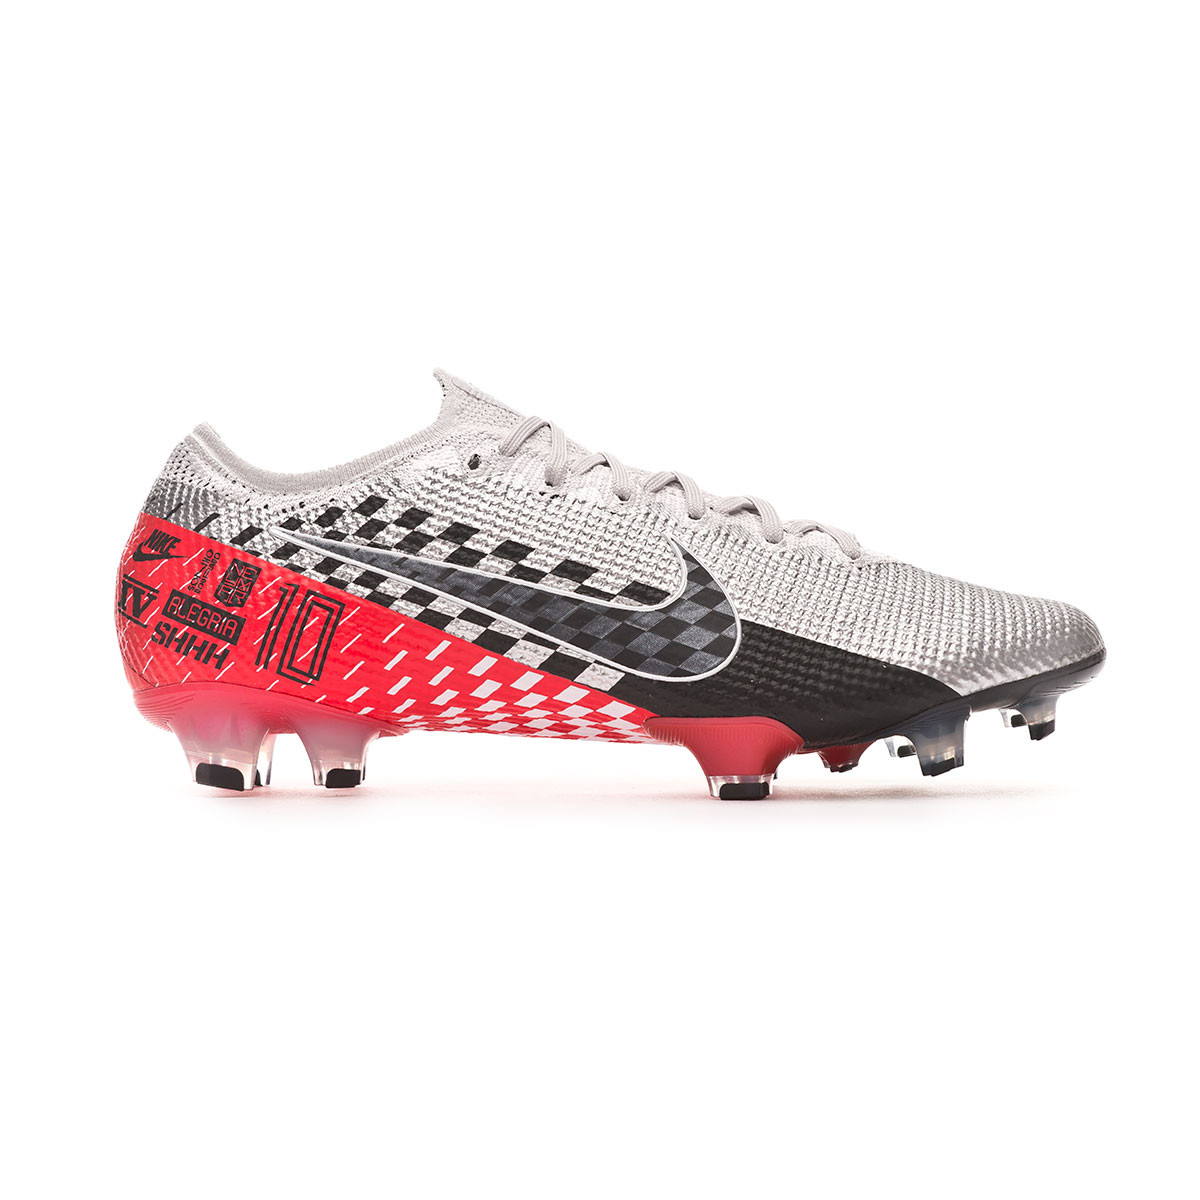 Zapatos de fútbol Nike Mercurial Vapor XIII Elite FG Neymar Jr  Chrome-Black-Red orbit-Platinum tint - Tienda de fútbol Fútbol Emotion